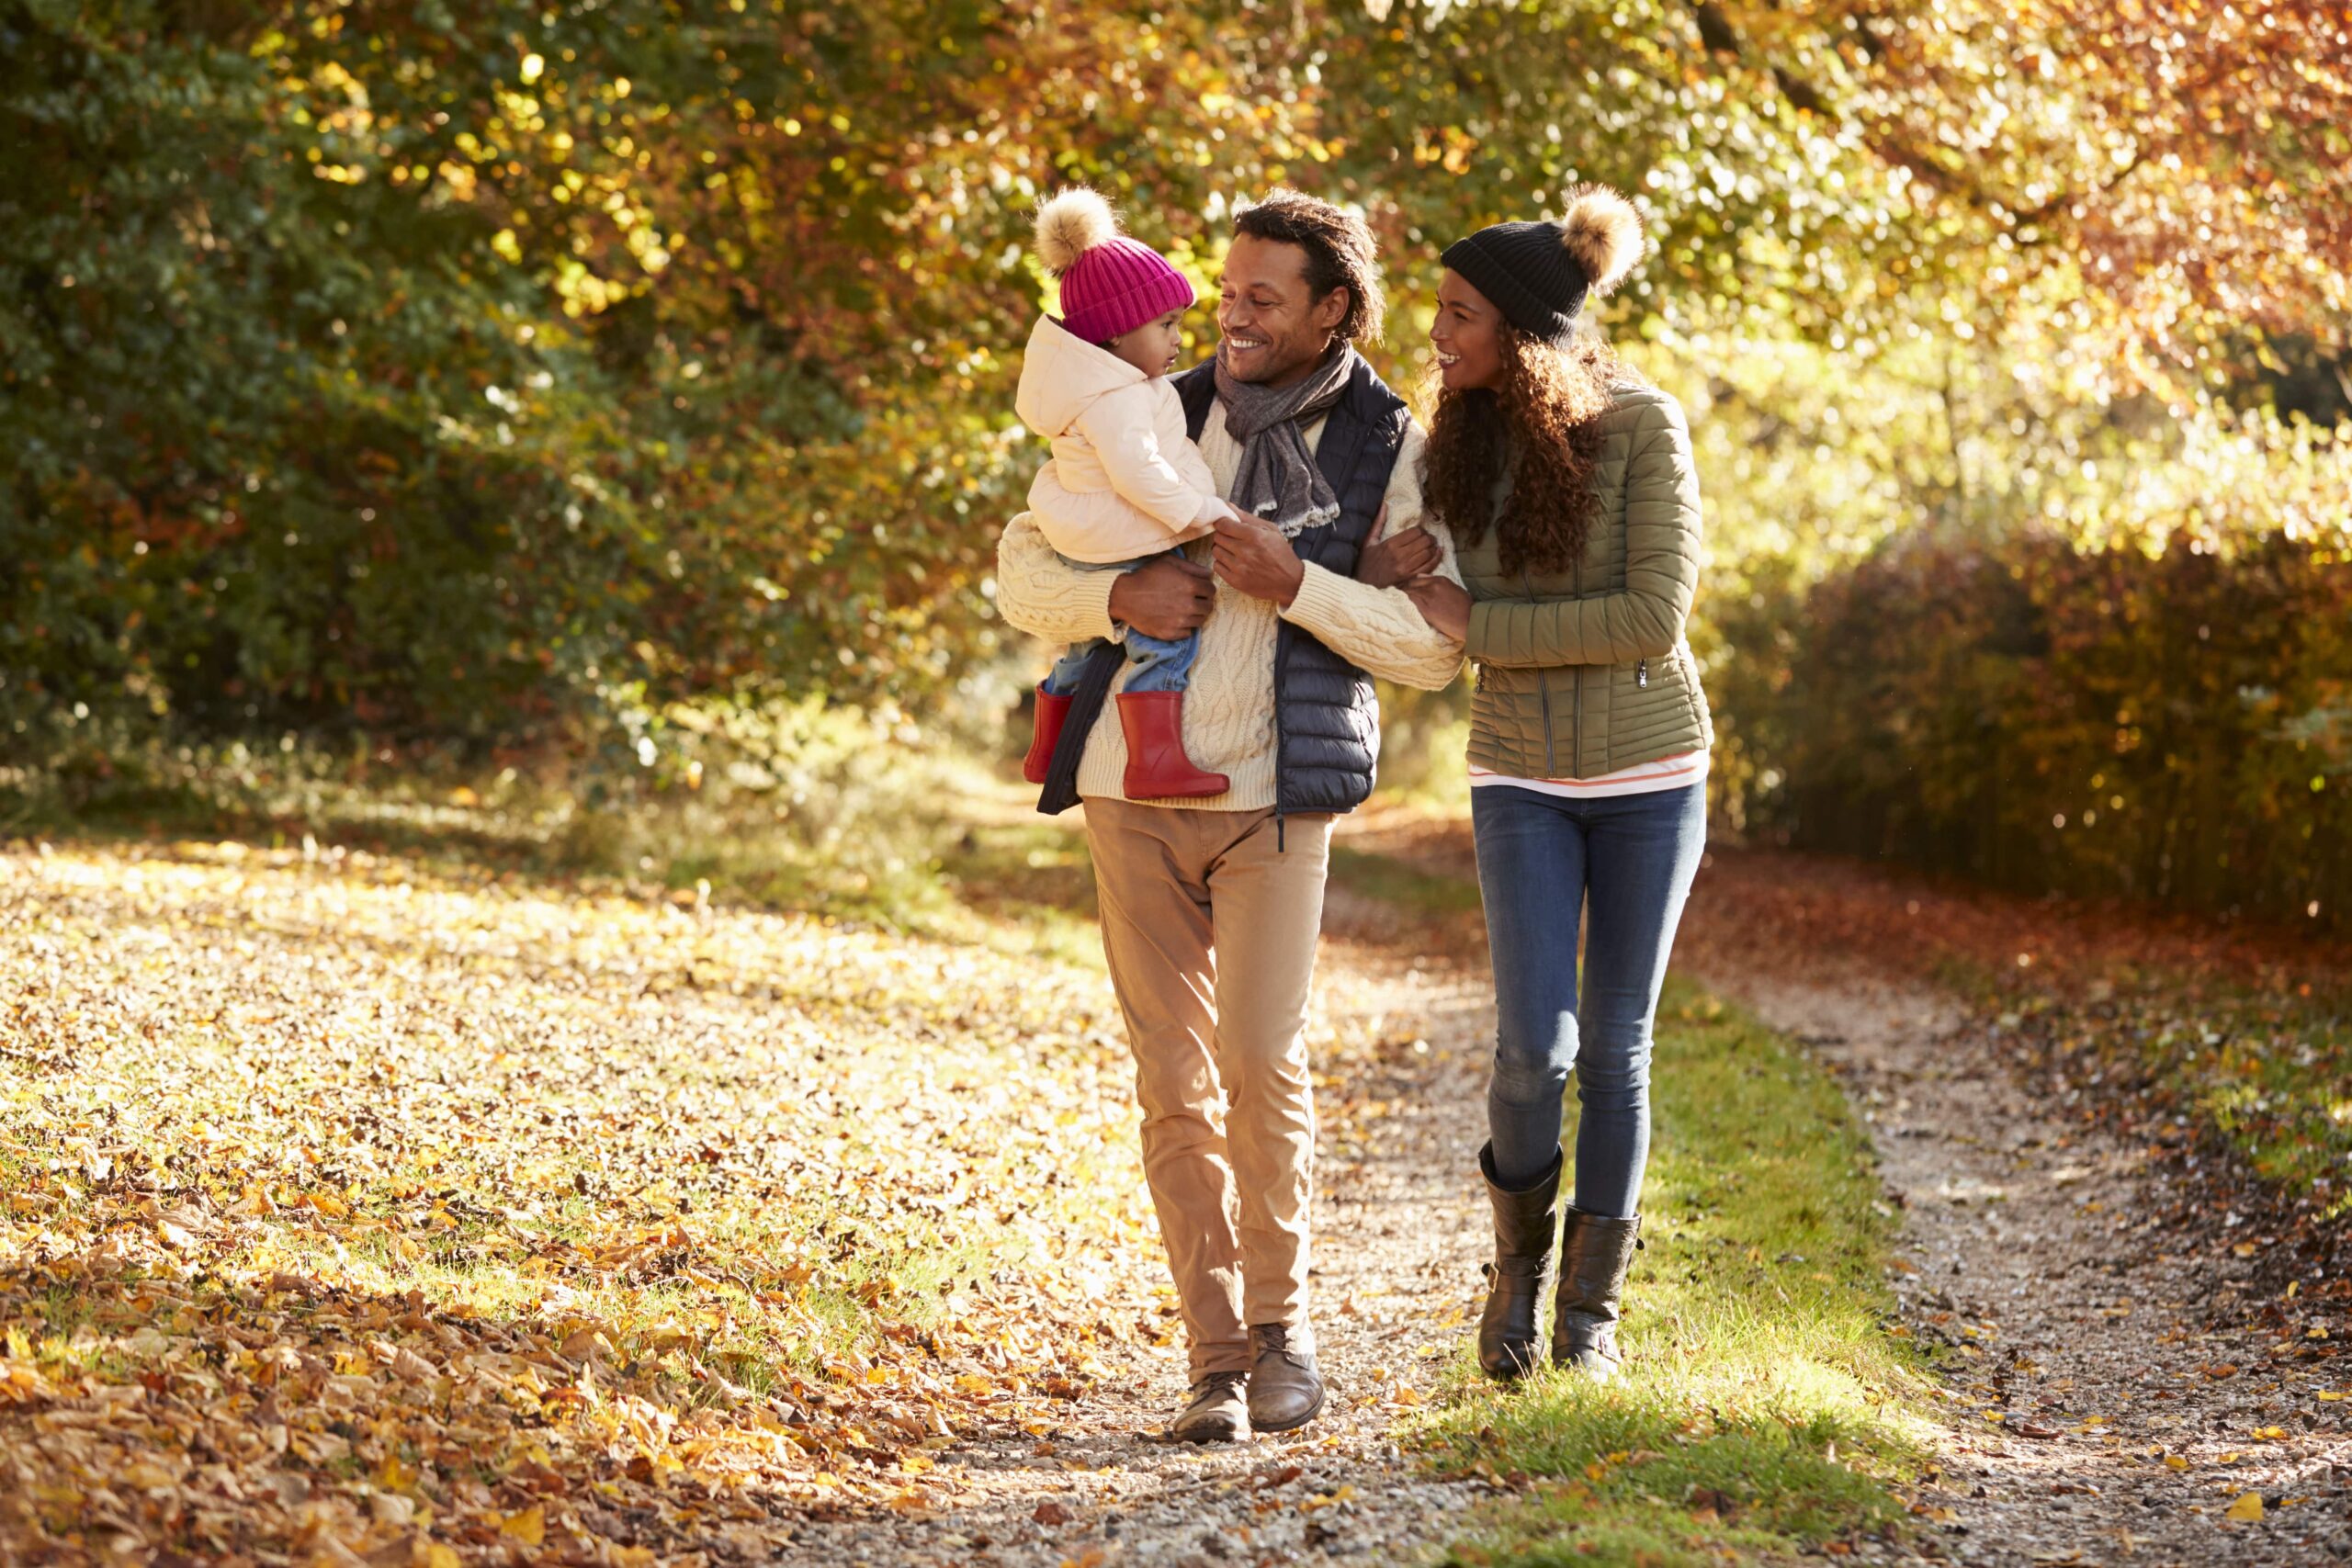 parents and child walking through autumn park path